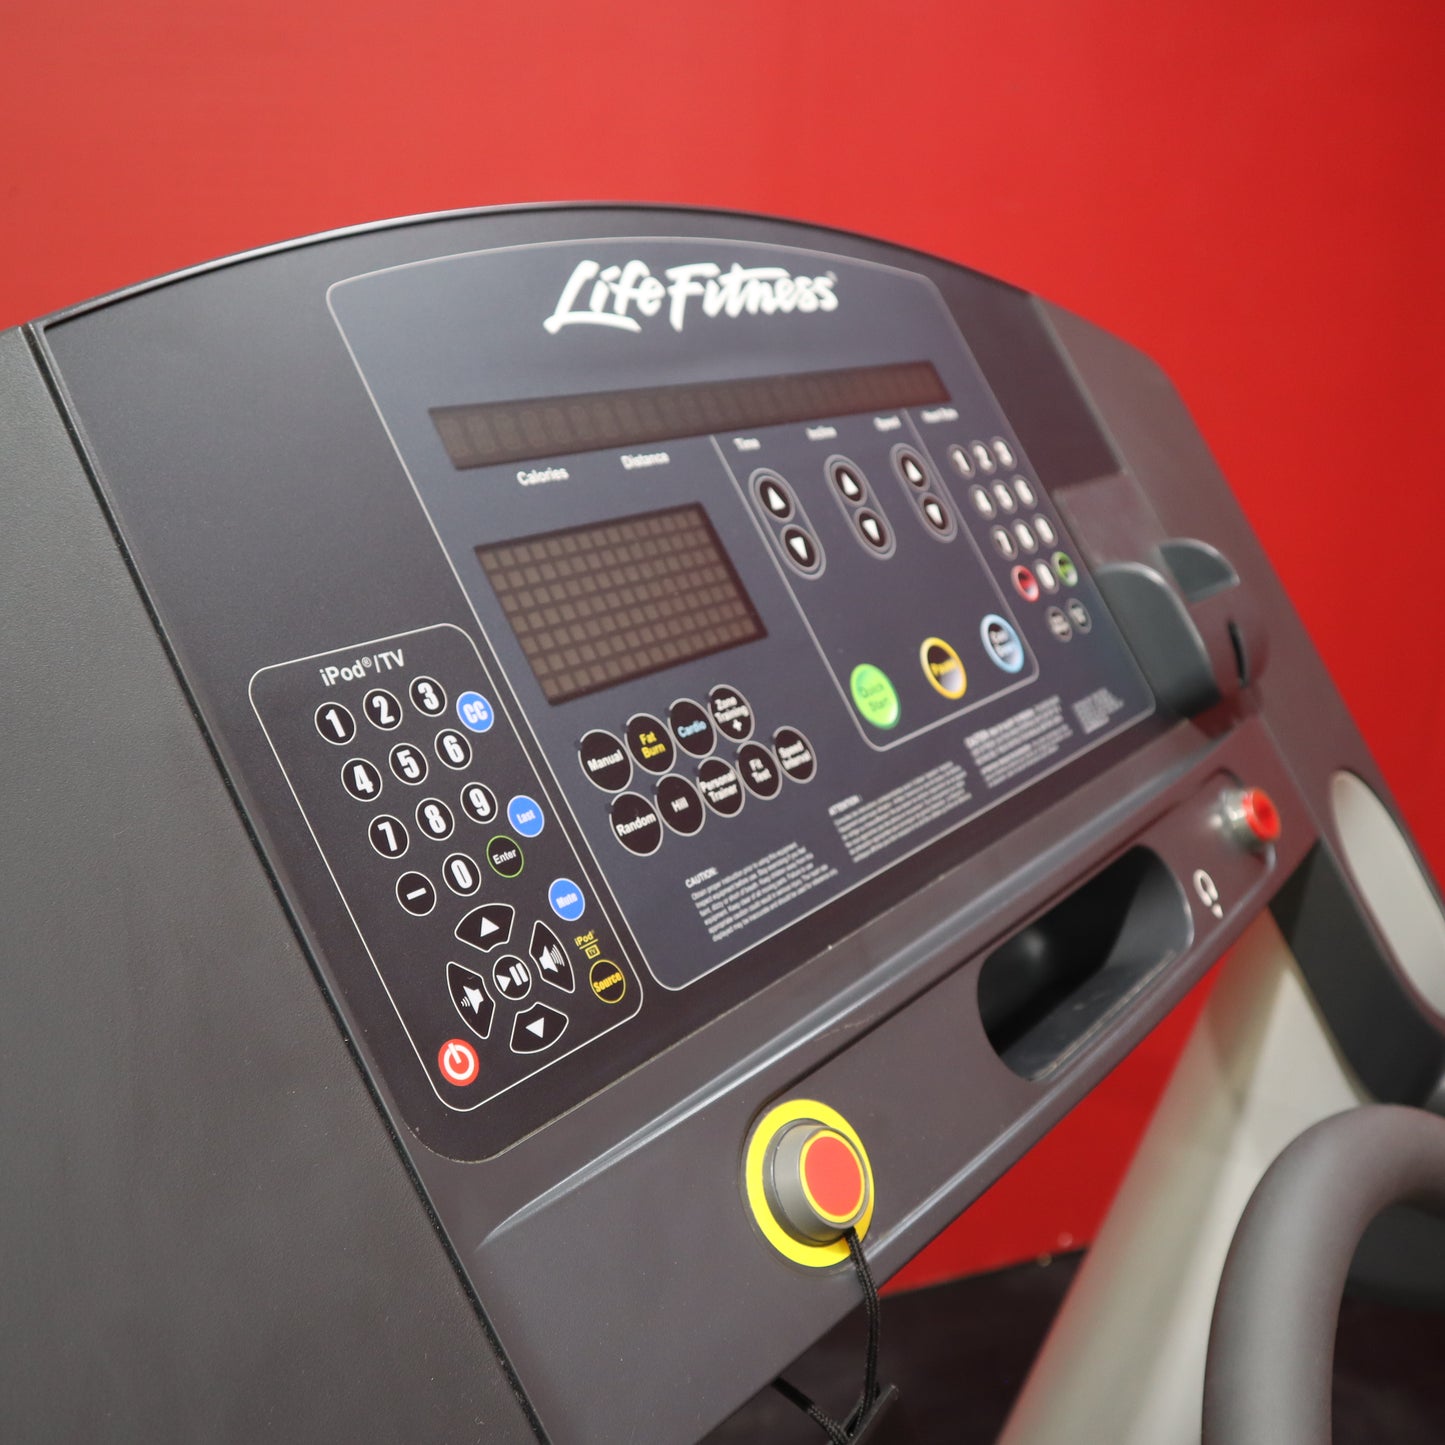 Life Fitness CLST Integrity Series Treadmill (Light Gray) *Refurbished*